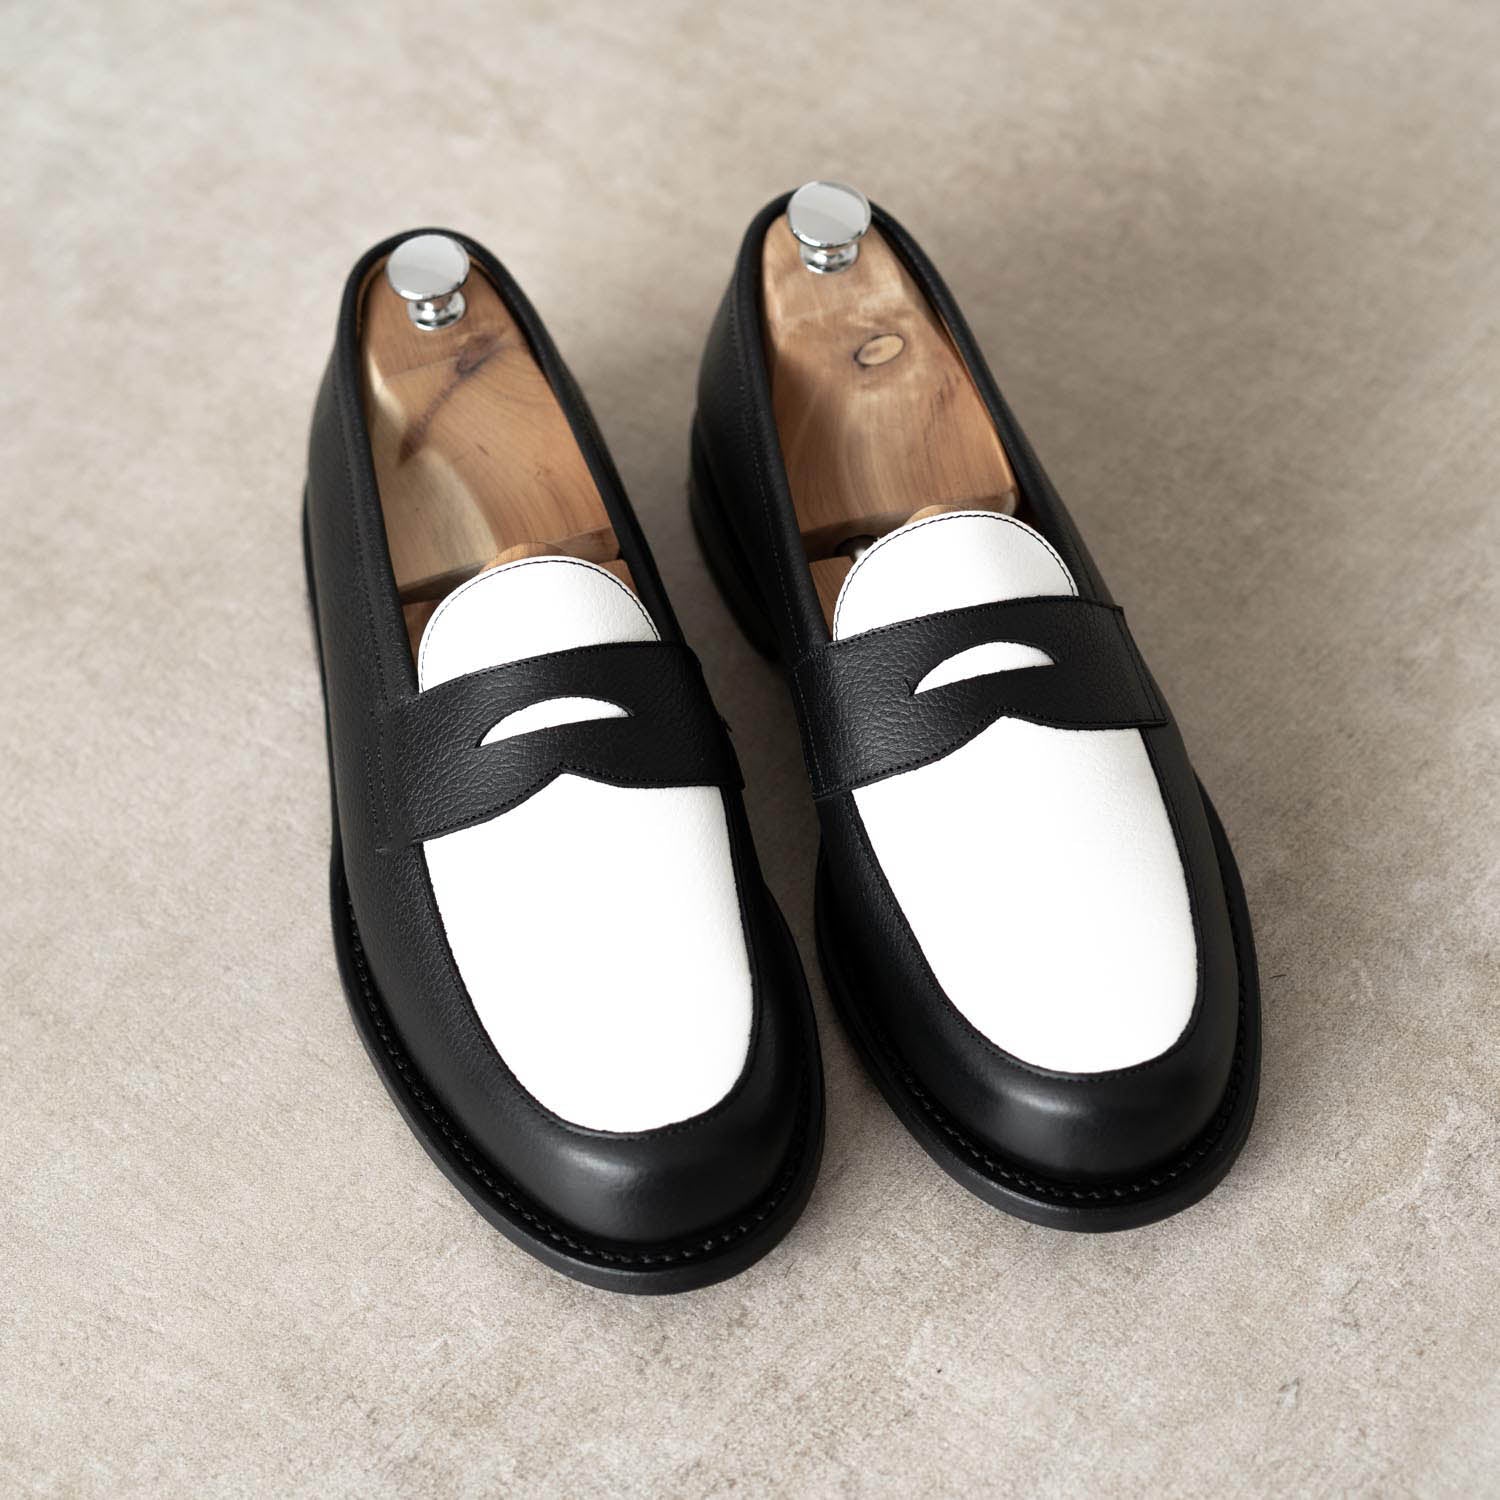 Penny Loafer - Chaussures Mocassin Cuir Noir et Blanc